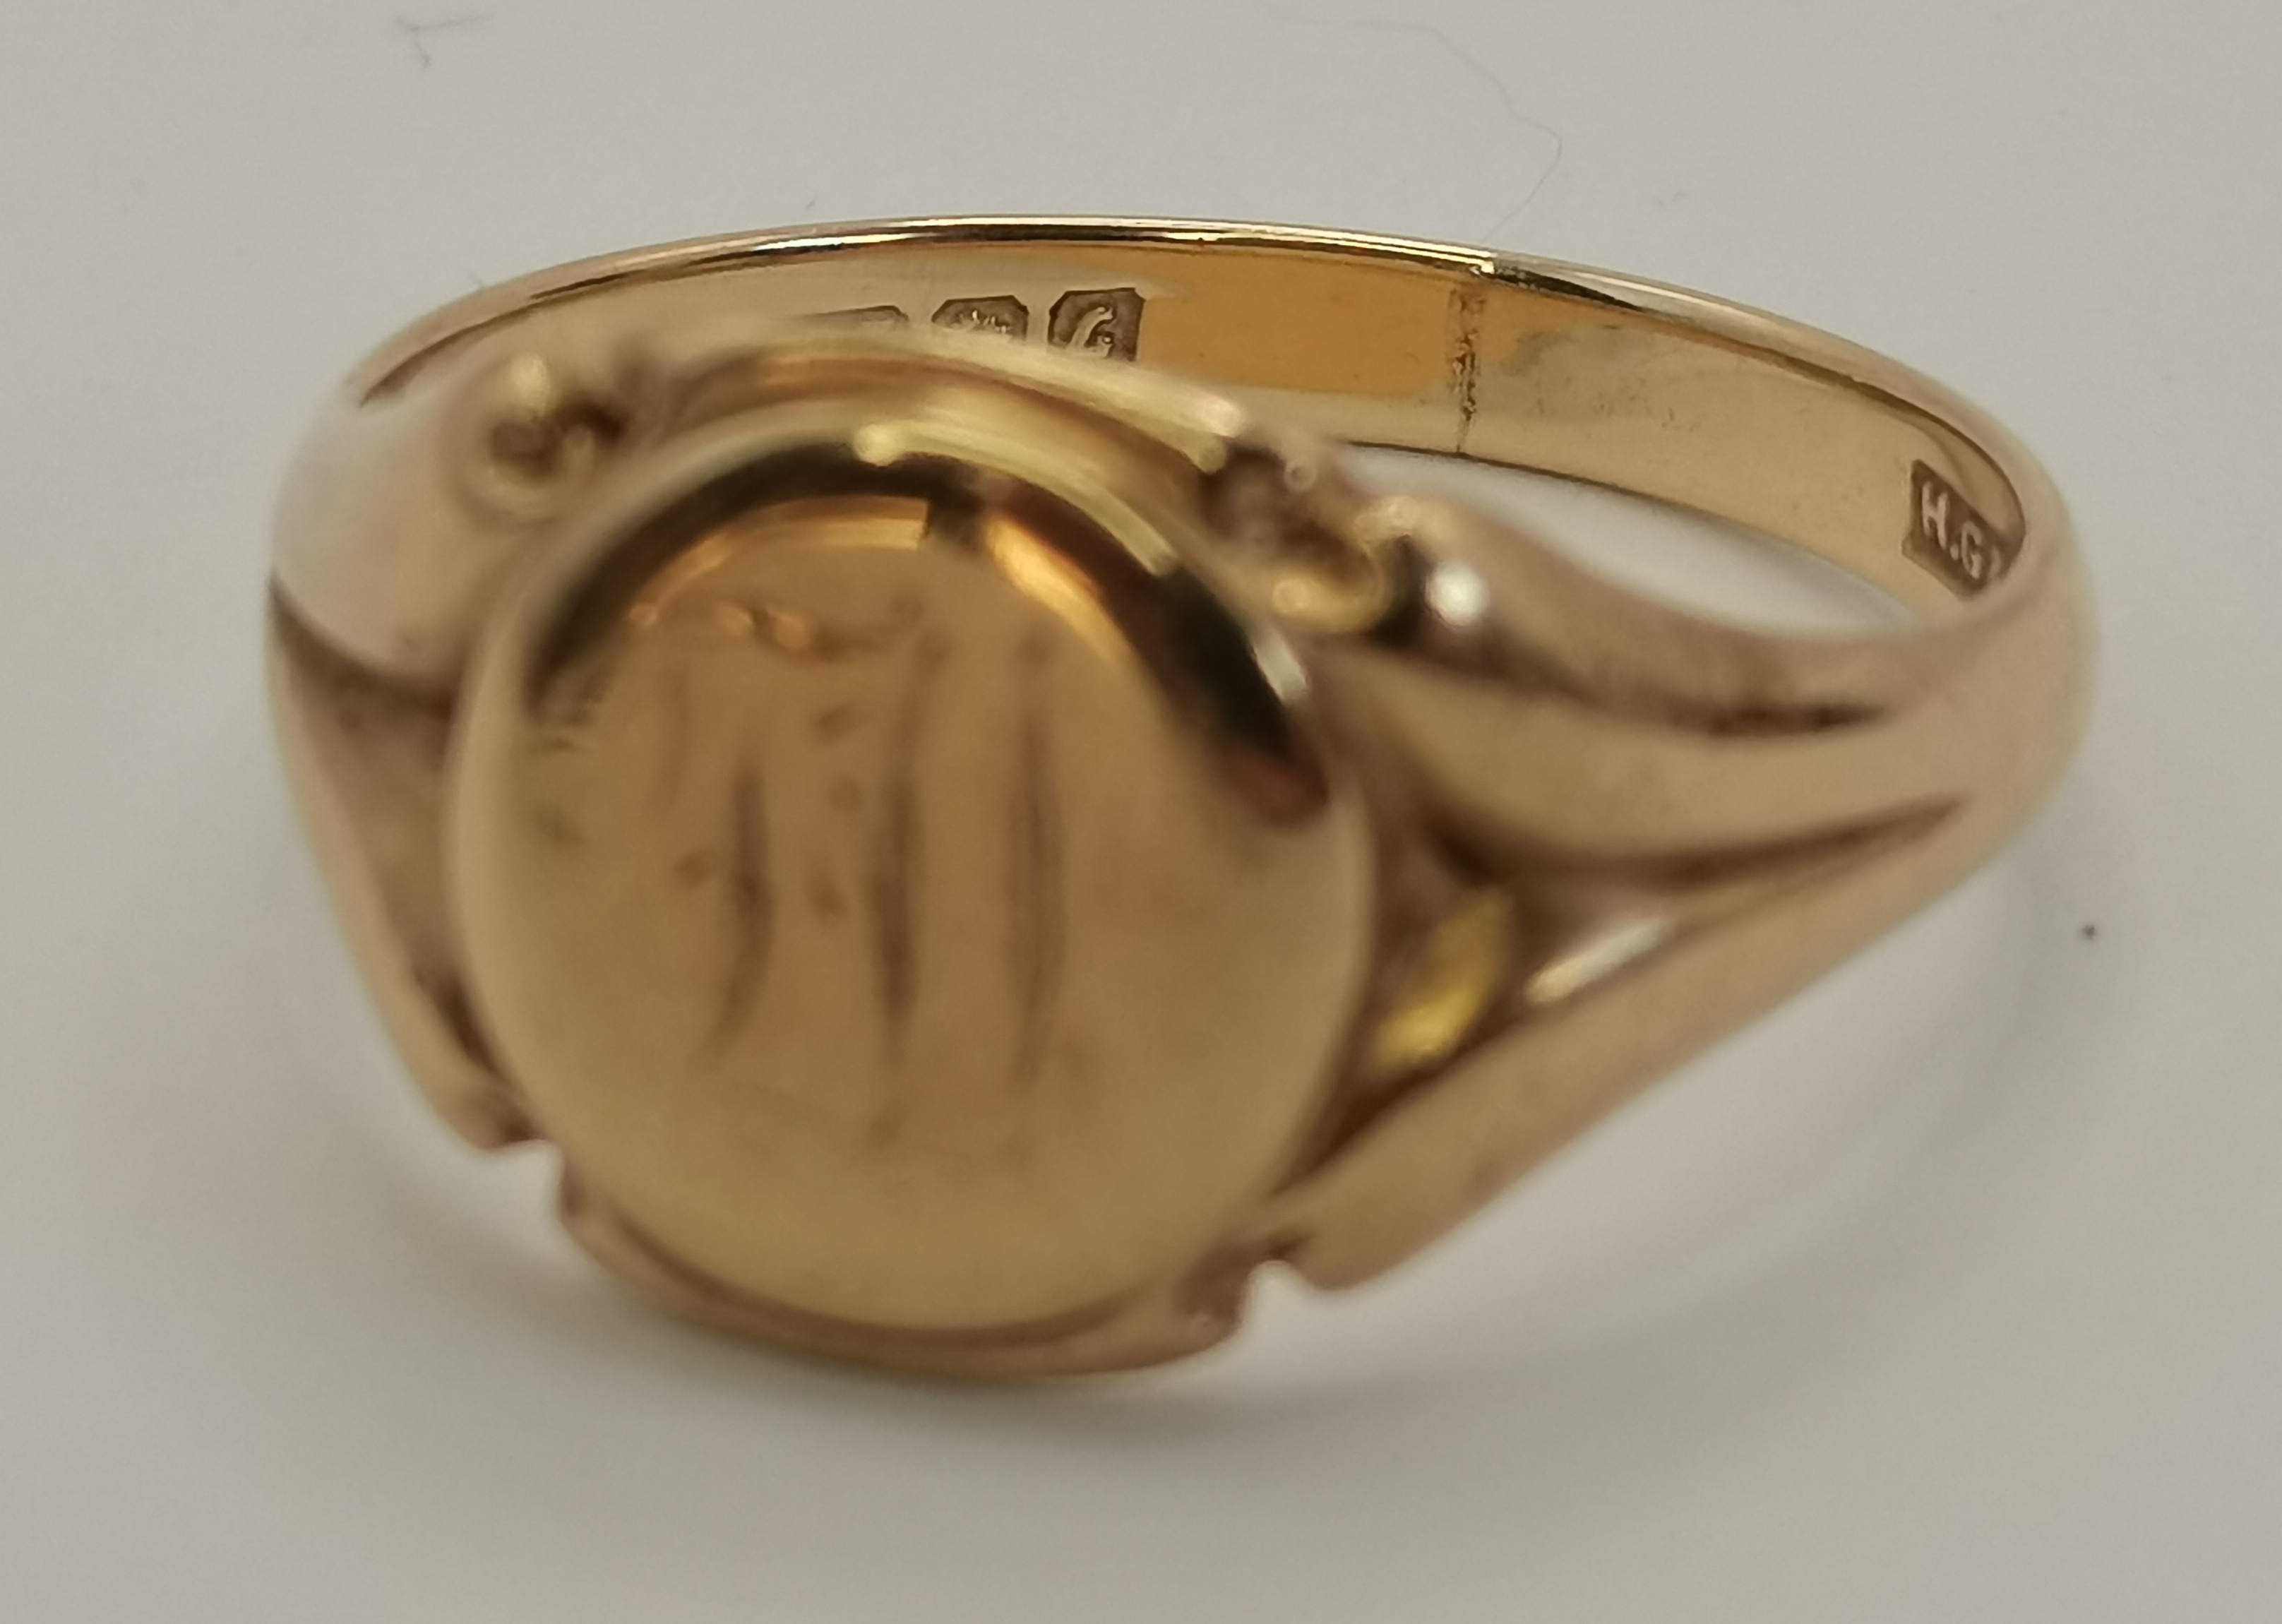 Two 9 carat gold signet rings - Image 2 of 6